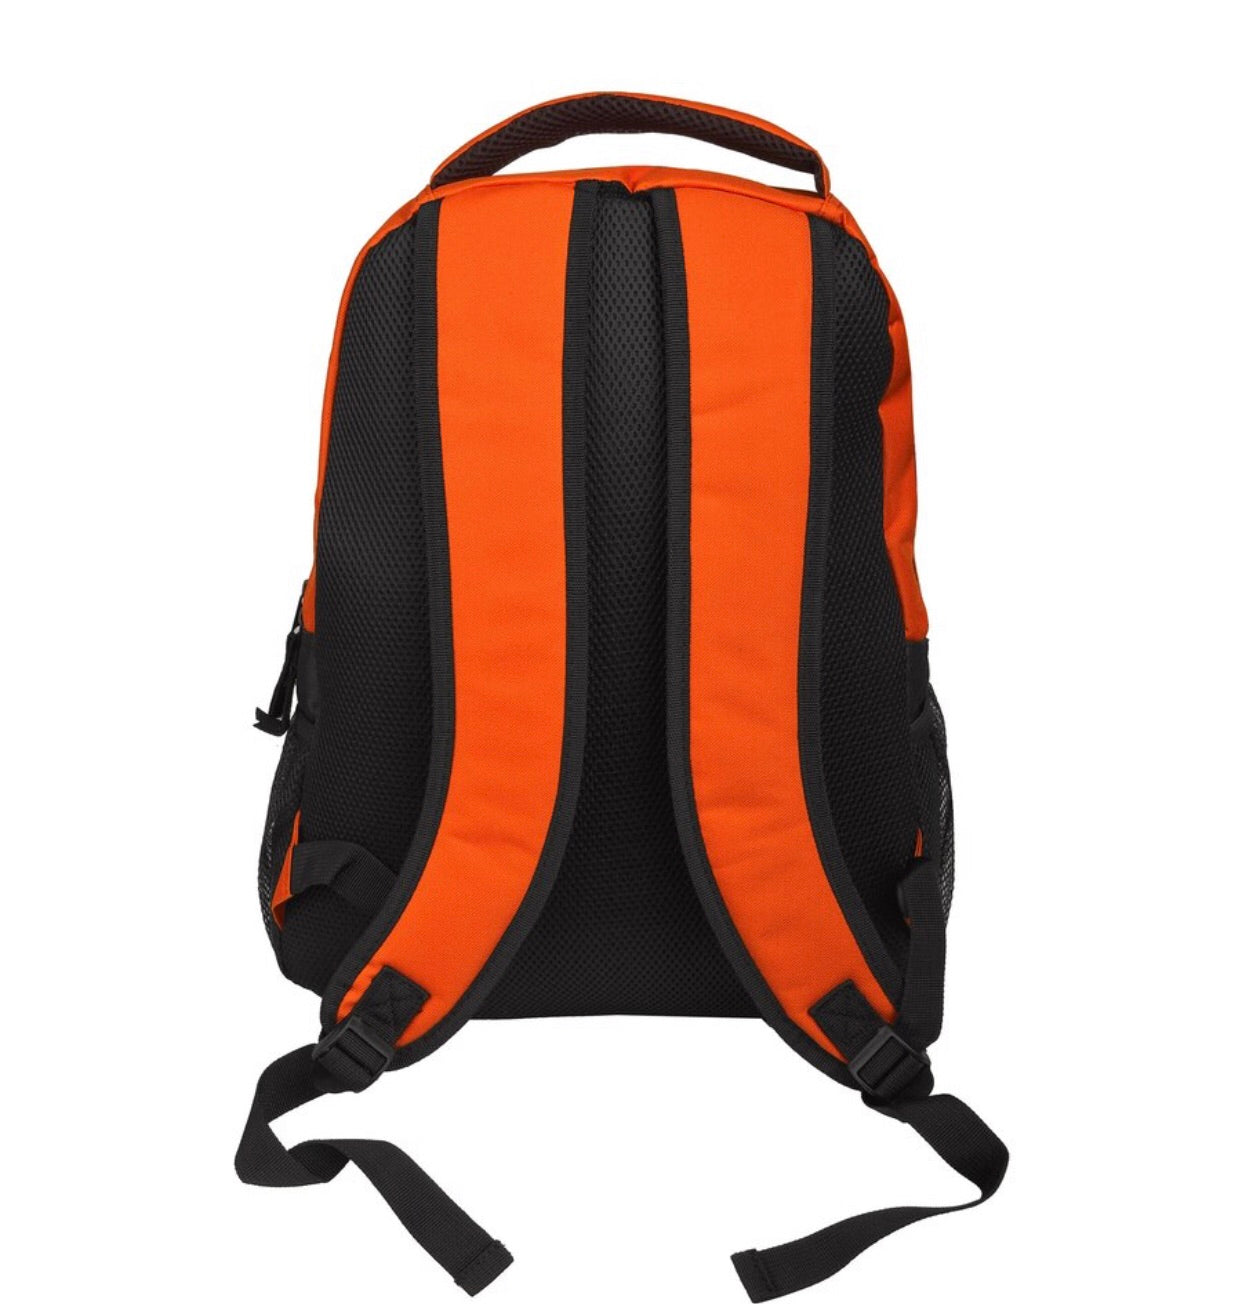 Miami Hurricanes Action Backpack - Orange